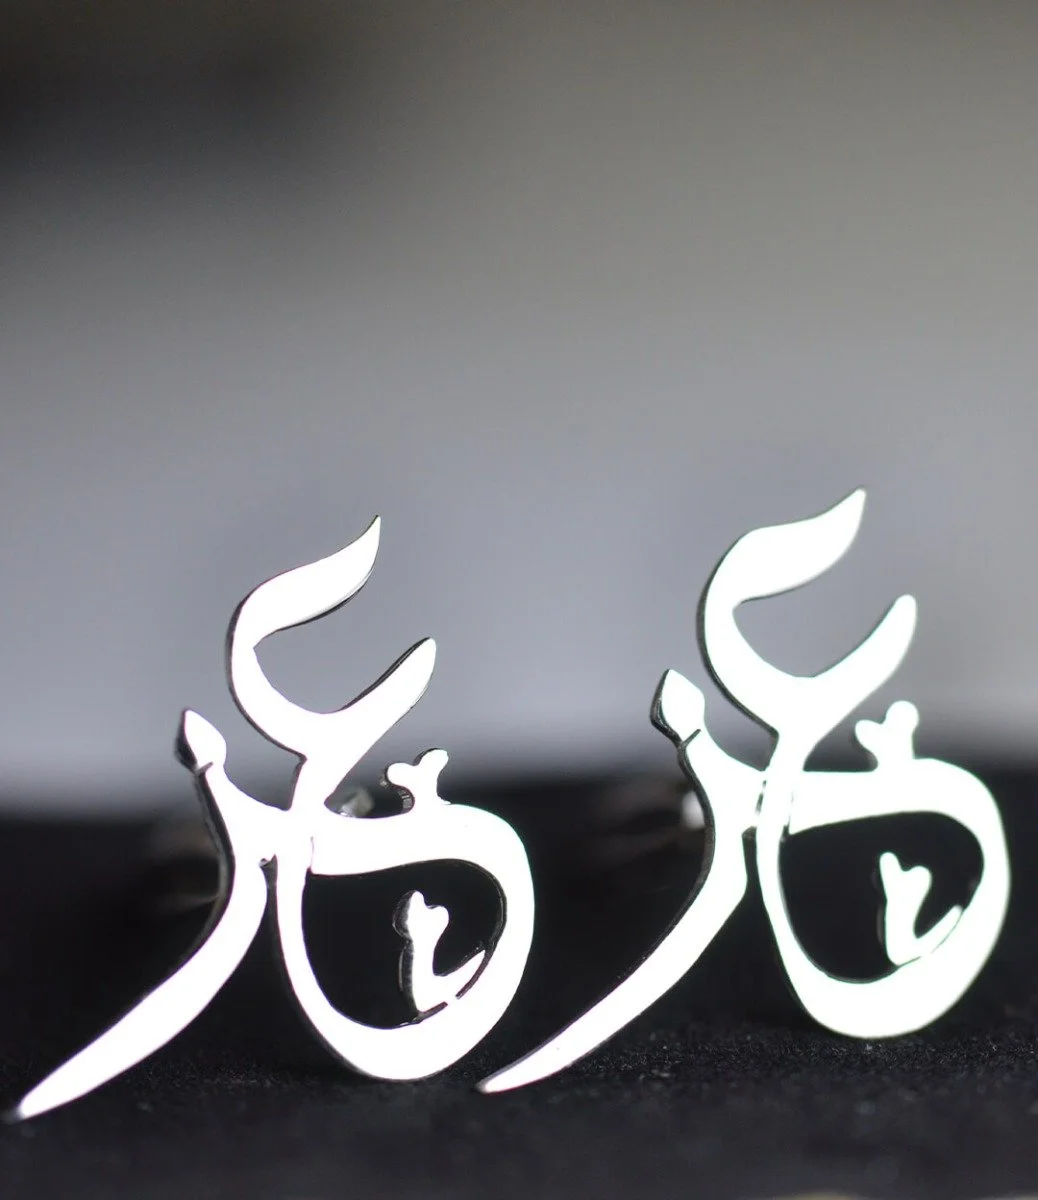 Customized Arabic Name Silver Cufflinks